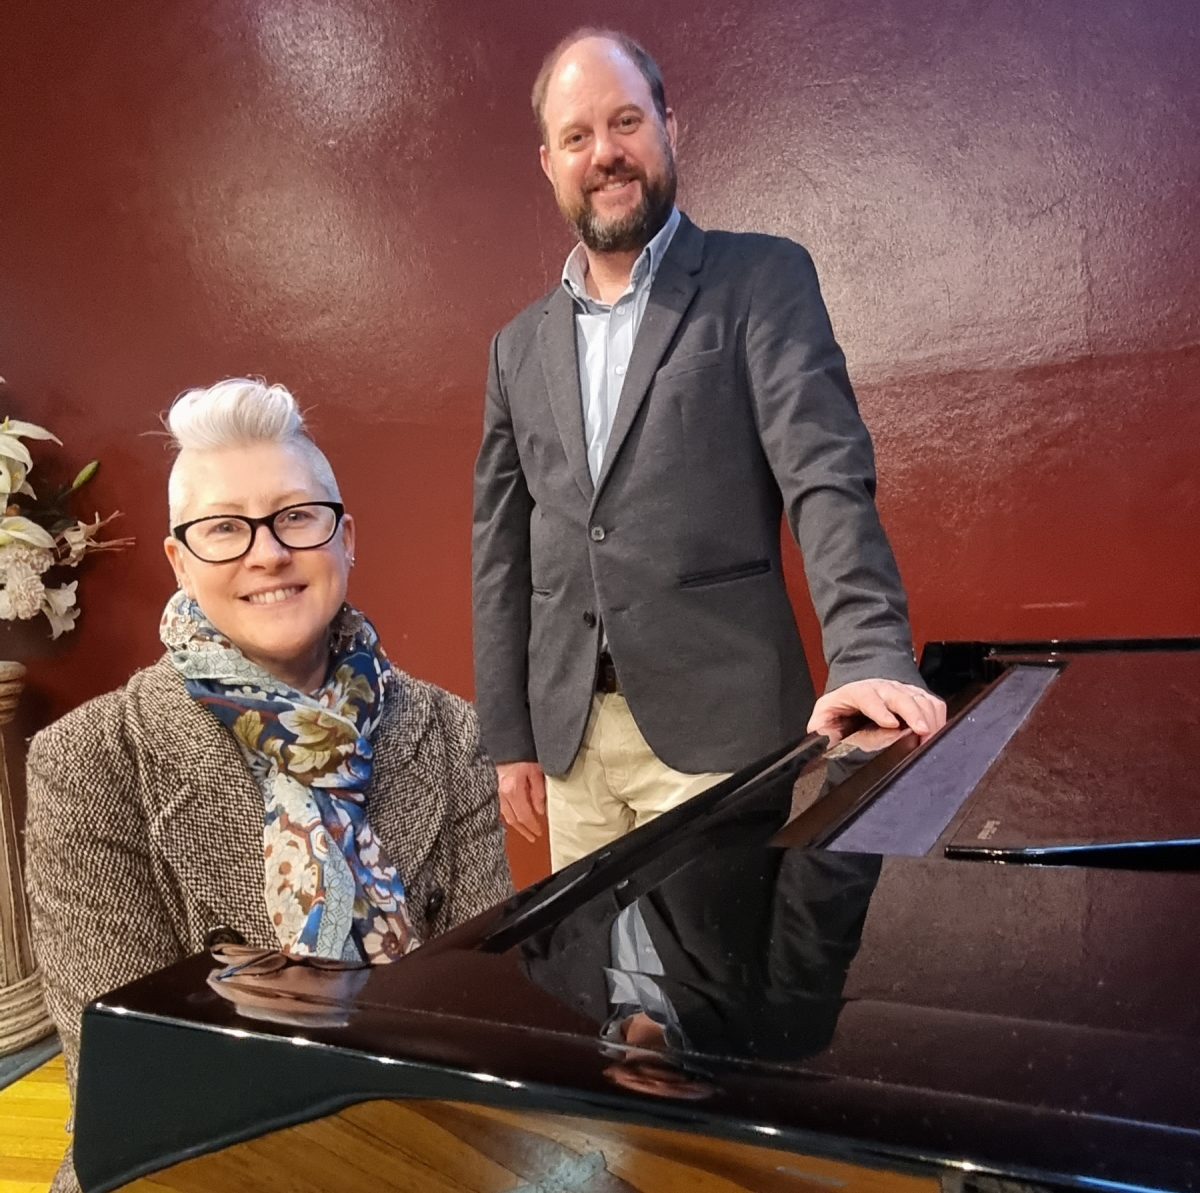 Kara Williams with RCM's CEO Hamish Tait at a piano